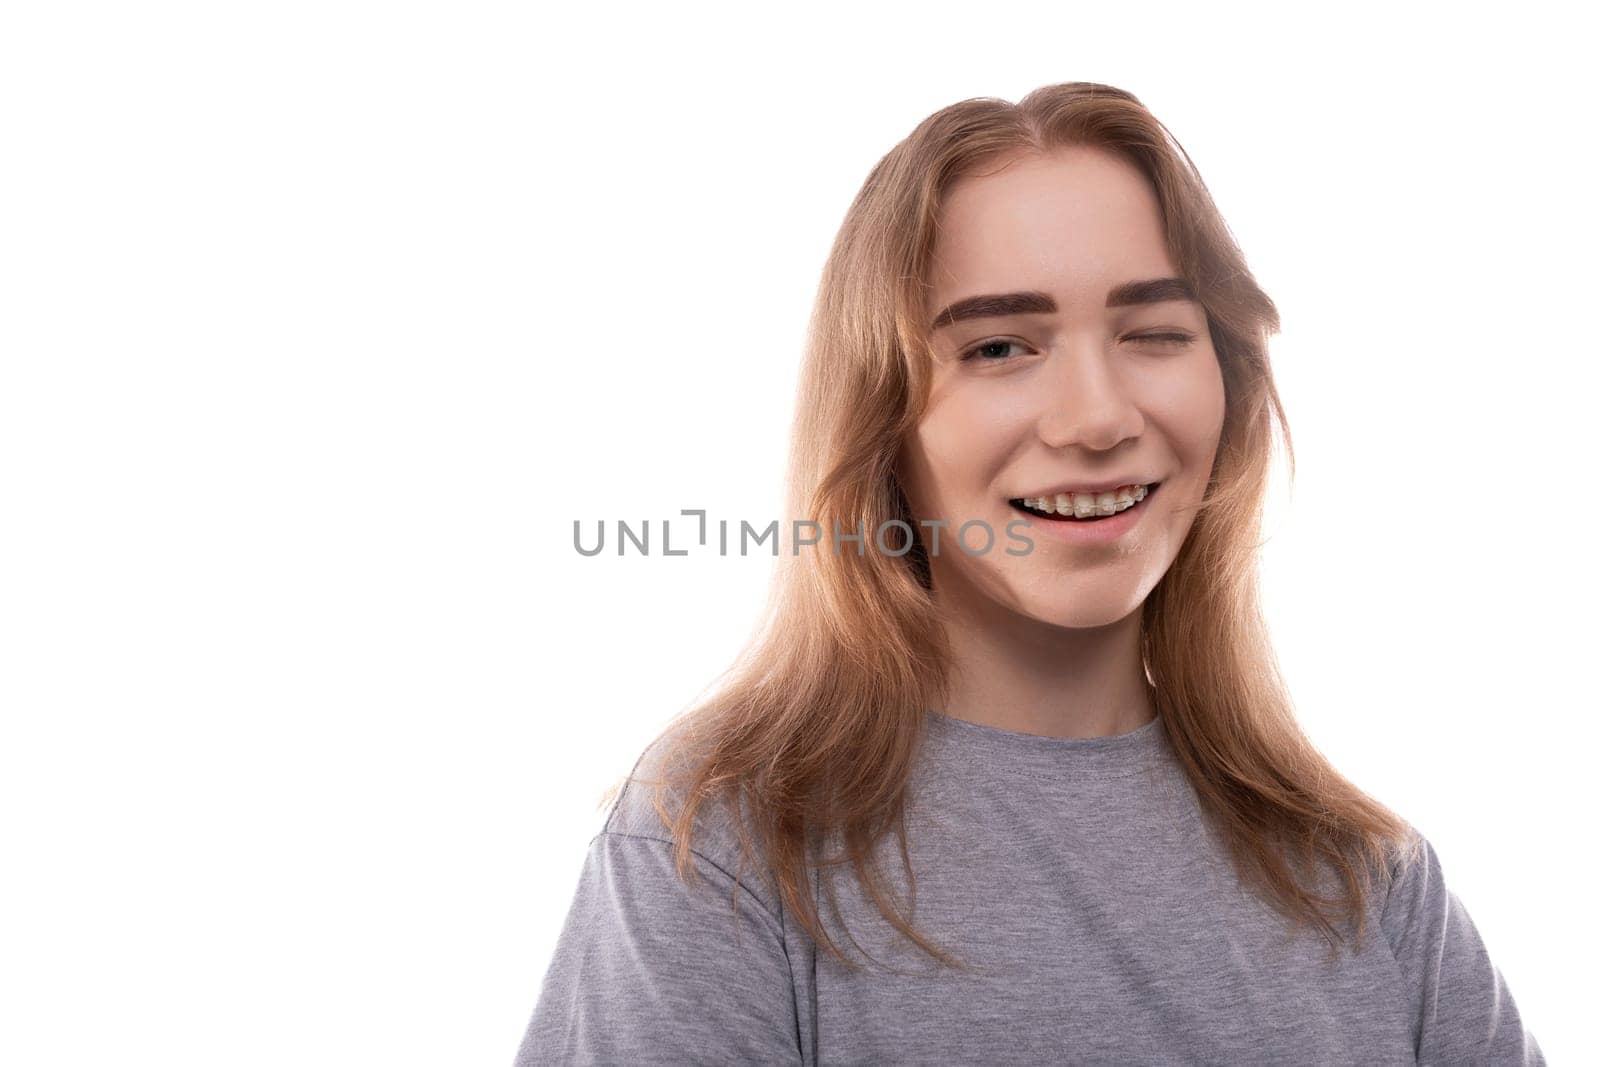 Headshot portrait of laughing teenage girl in gray t-shirt.